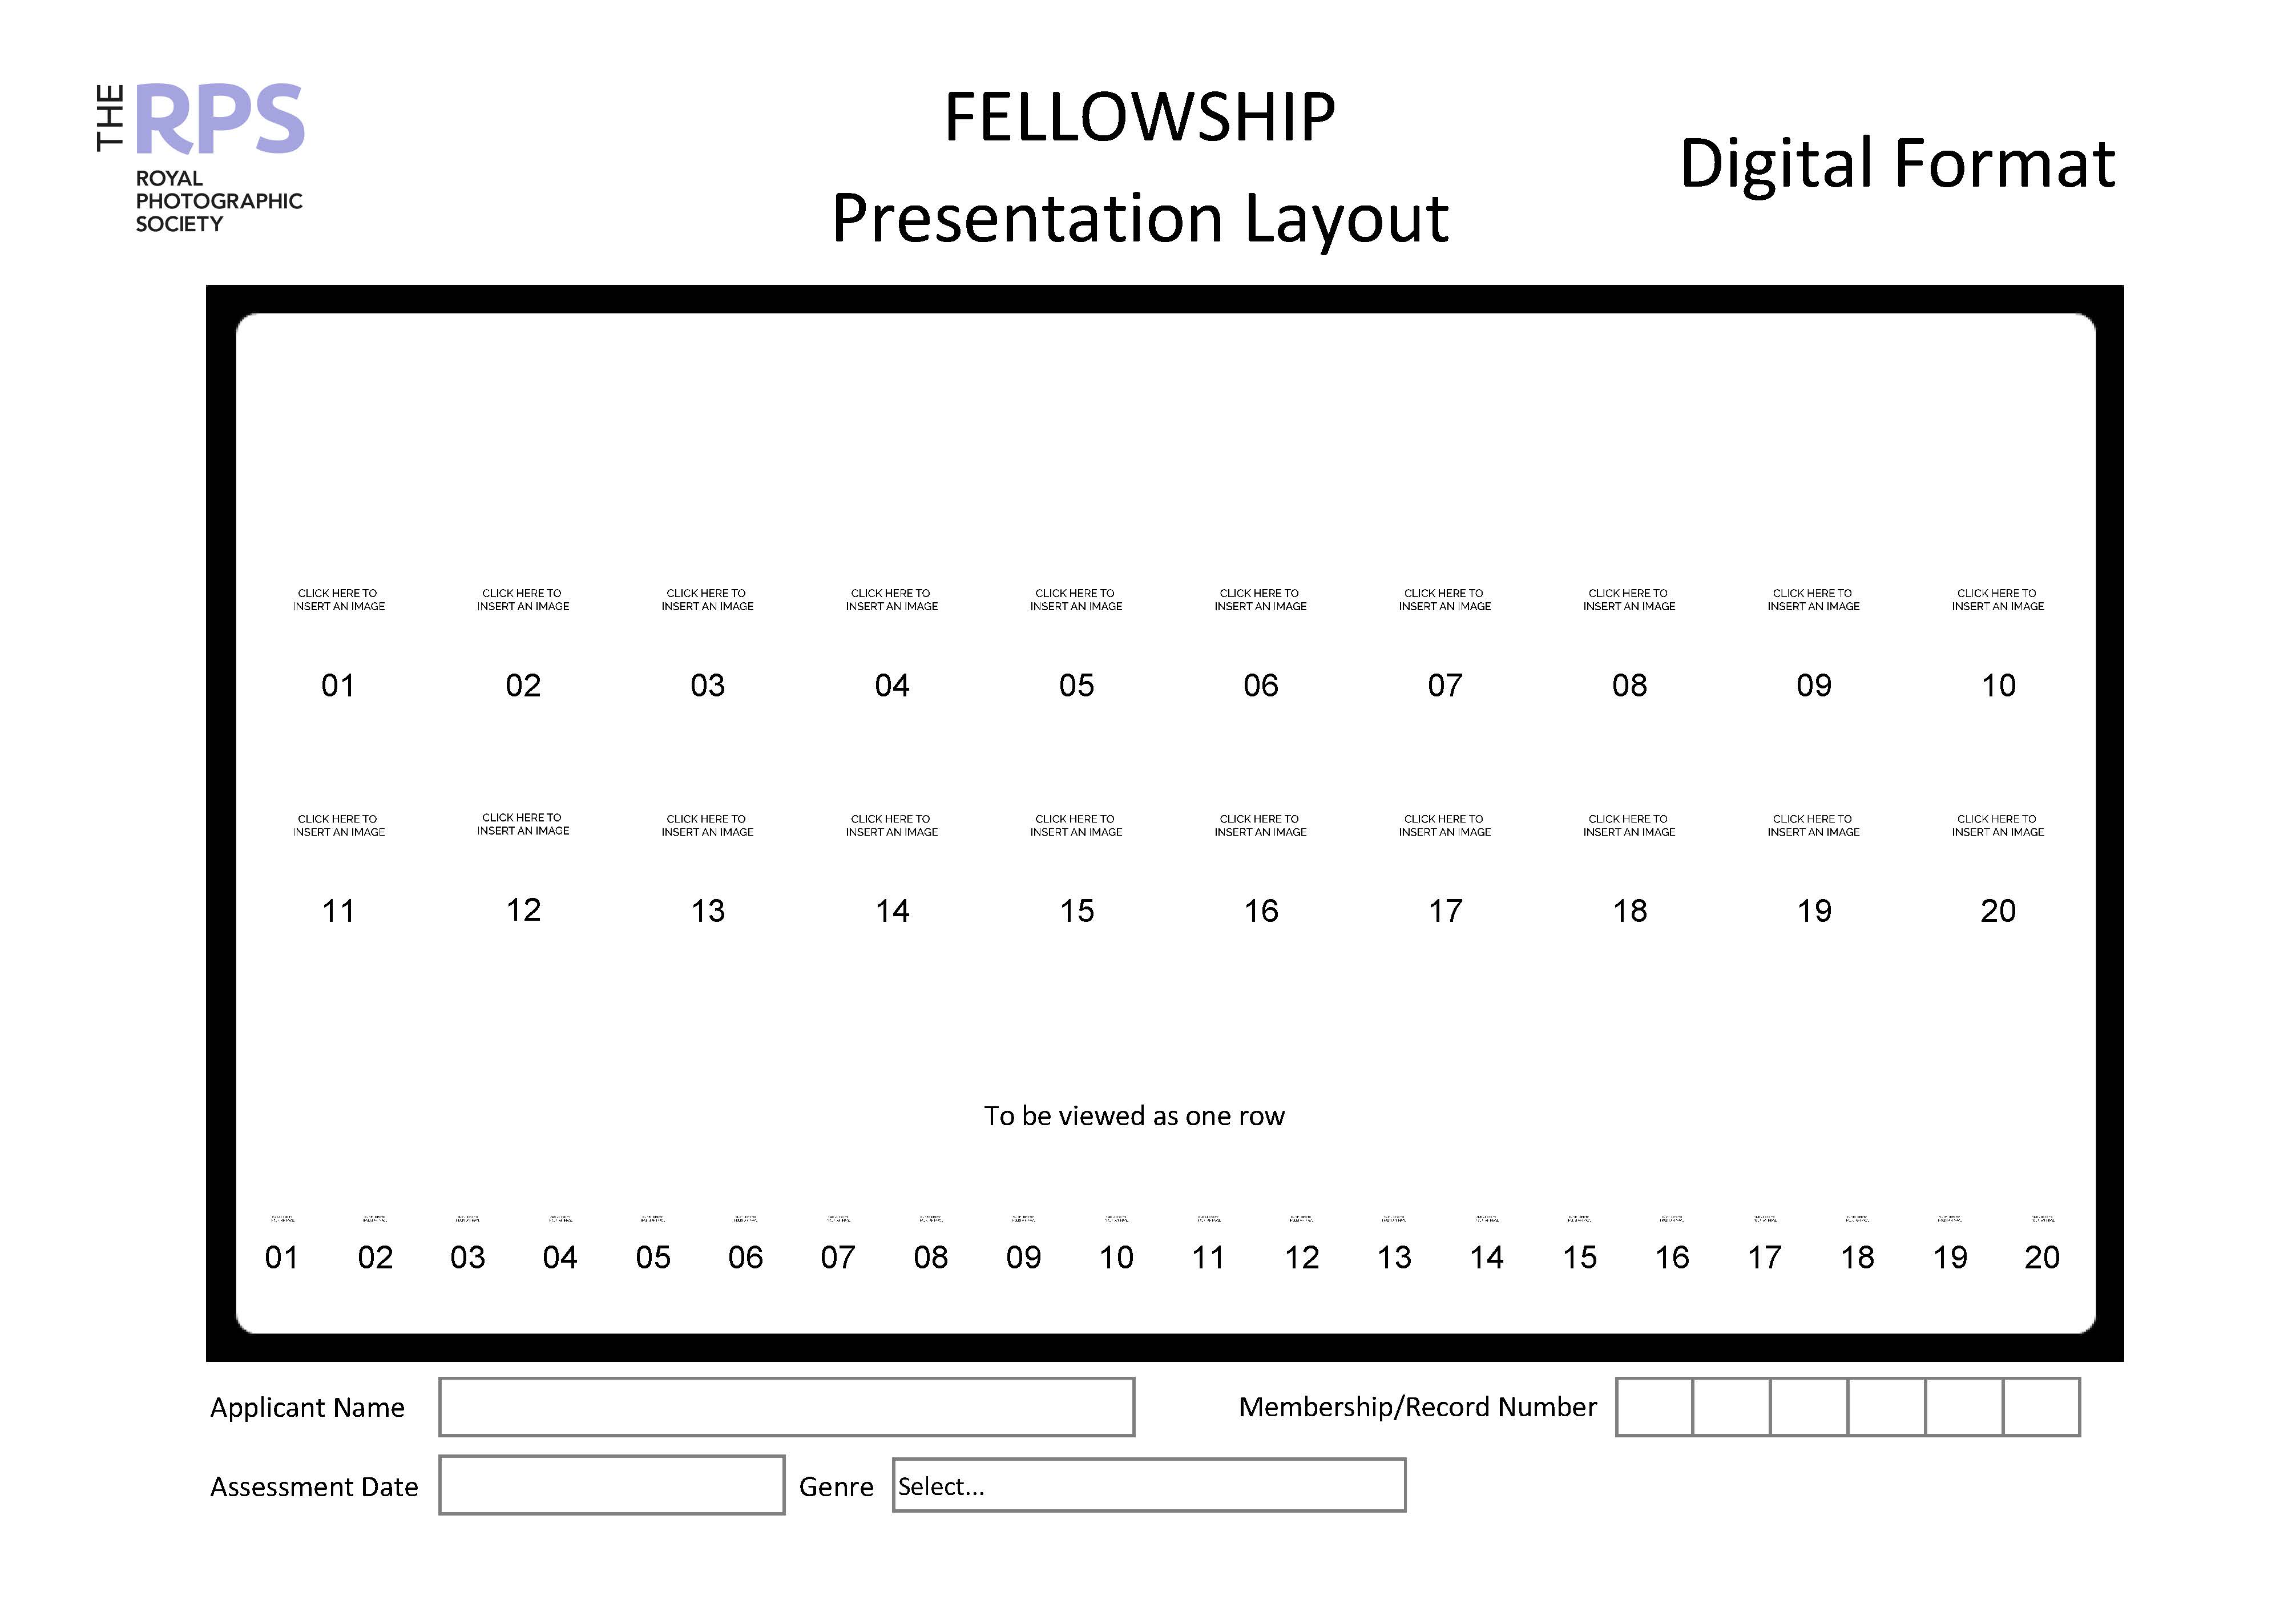 FRPS 2021 Presentation Layout 20 21 Single Row DIGITAL